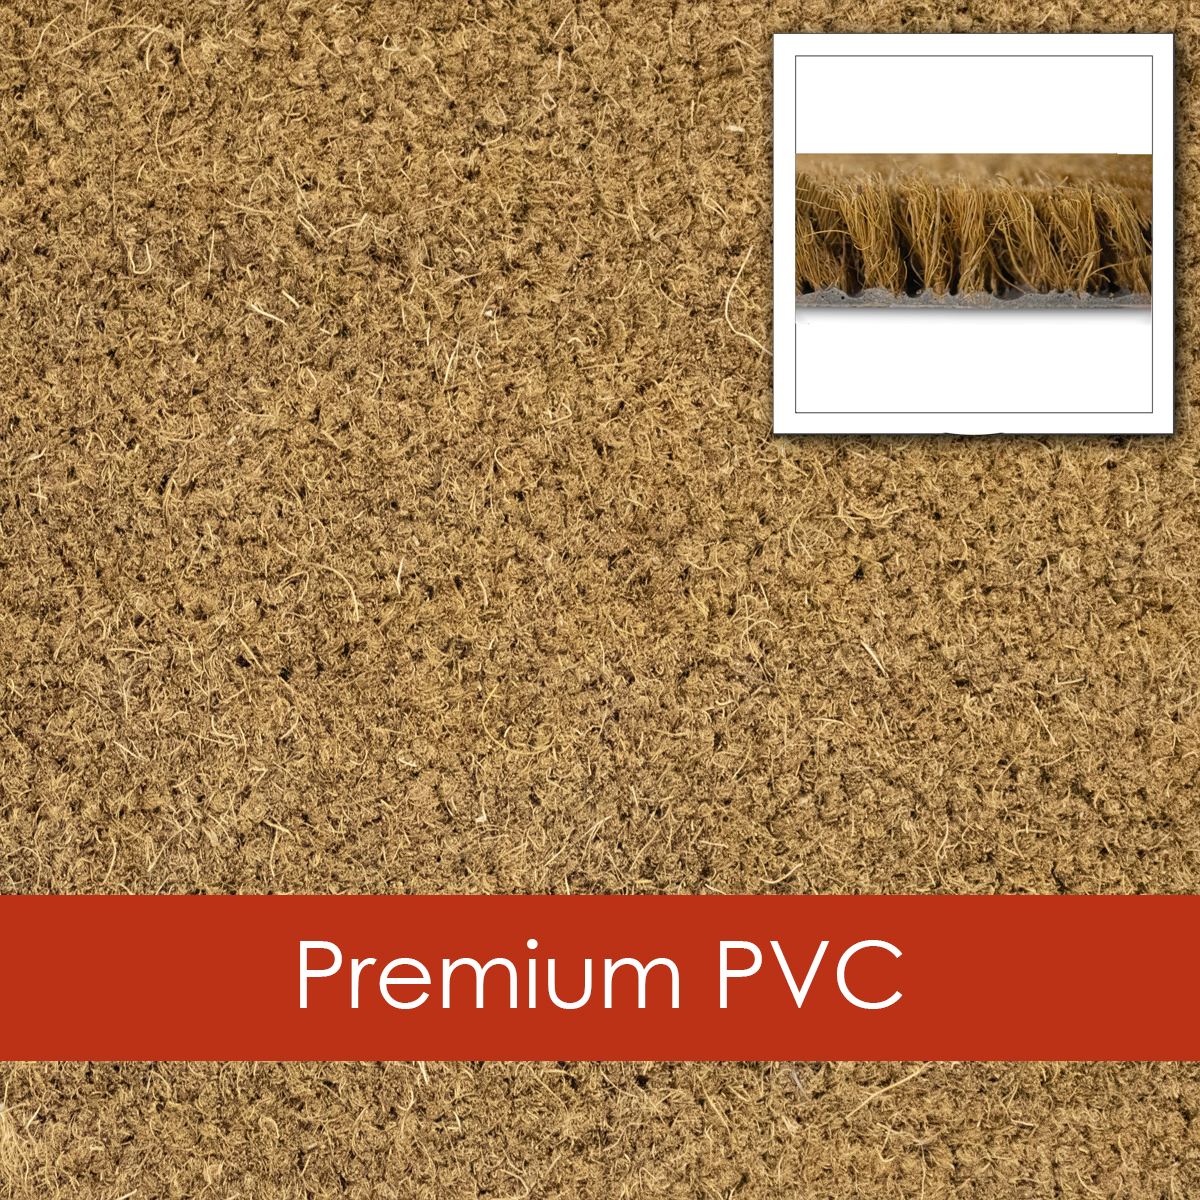 Natural PVC backed coir premium grade